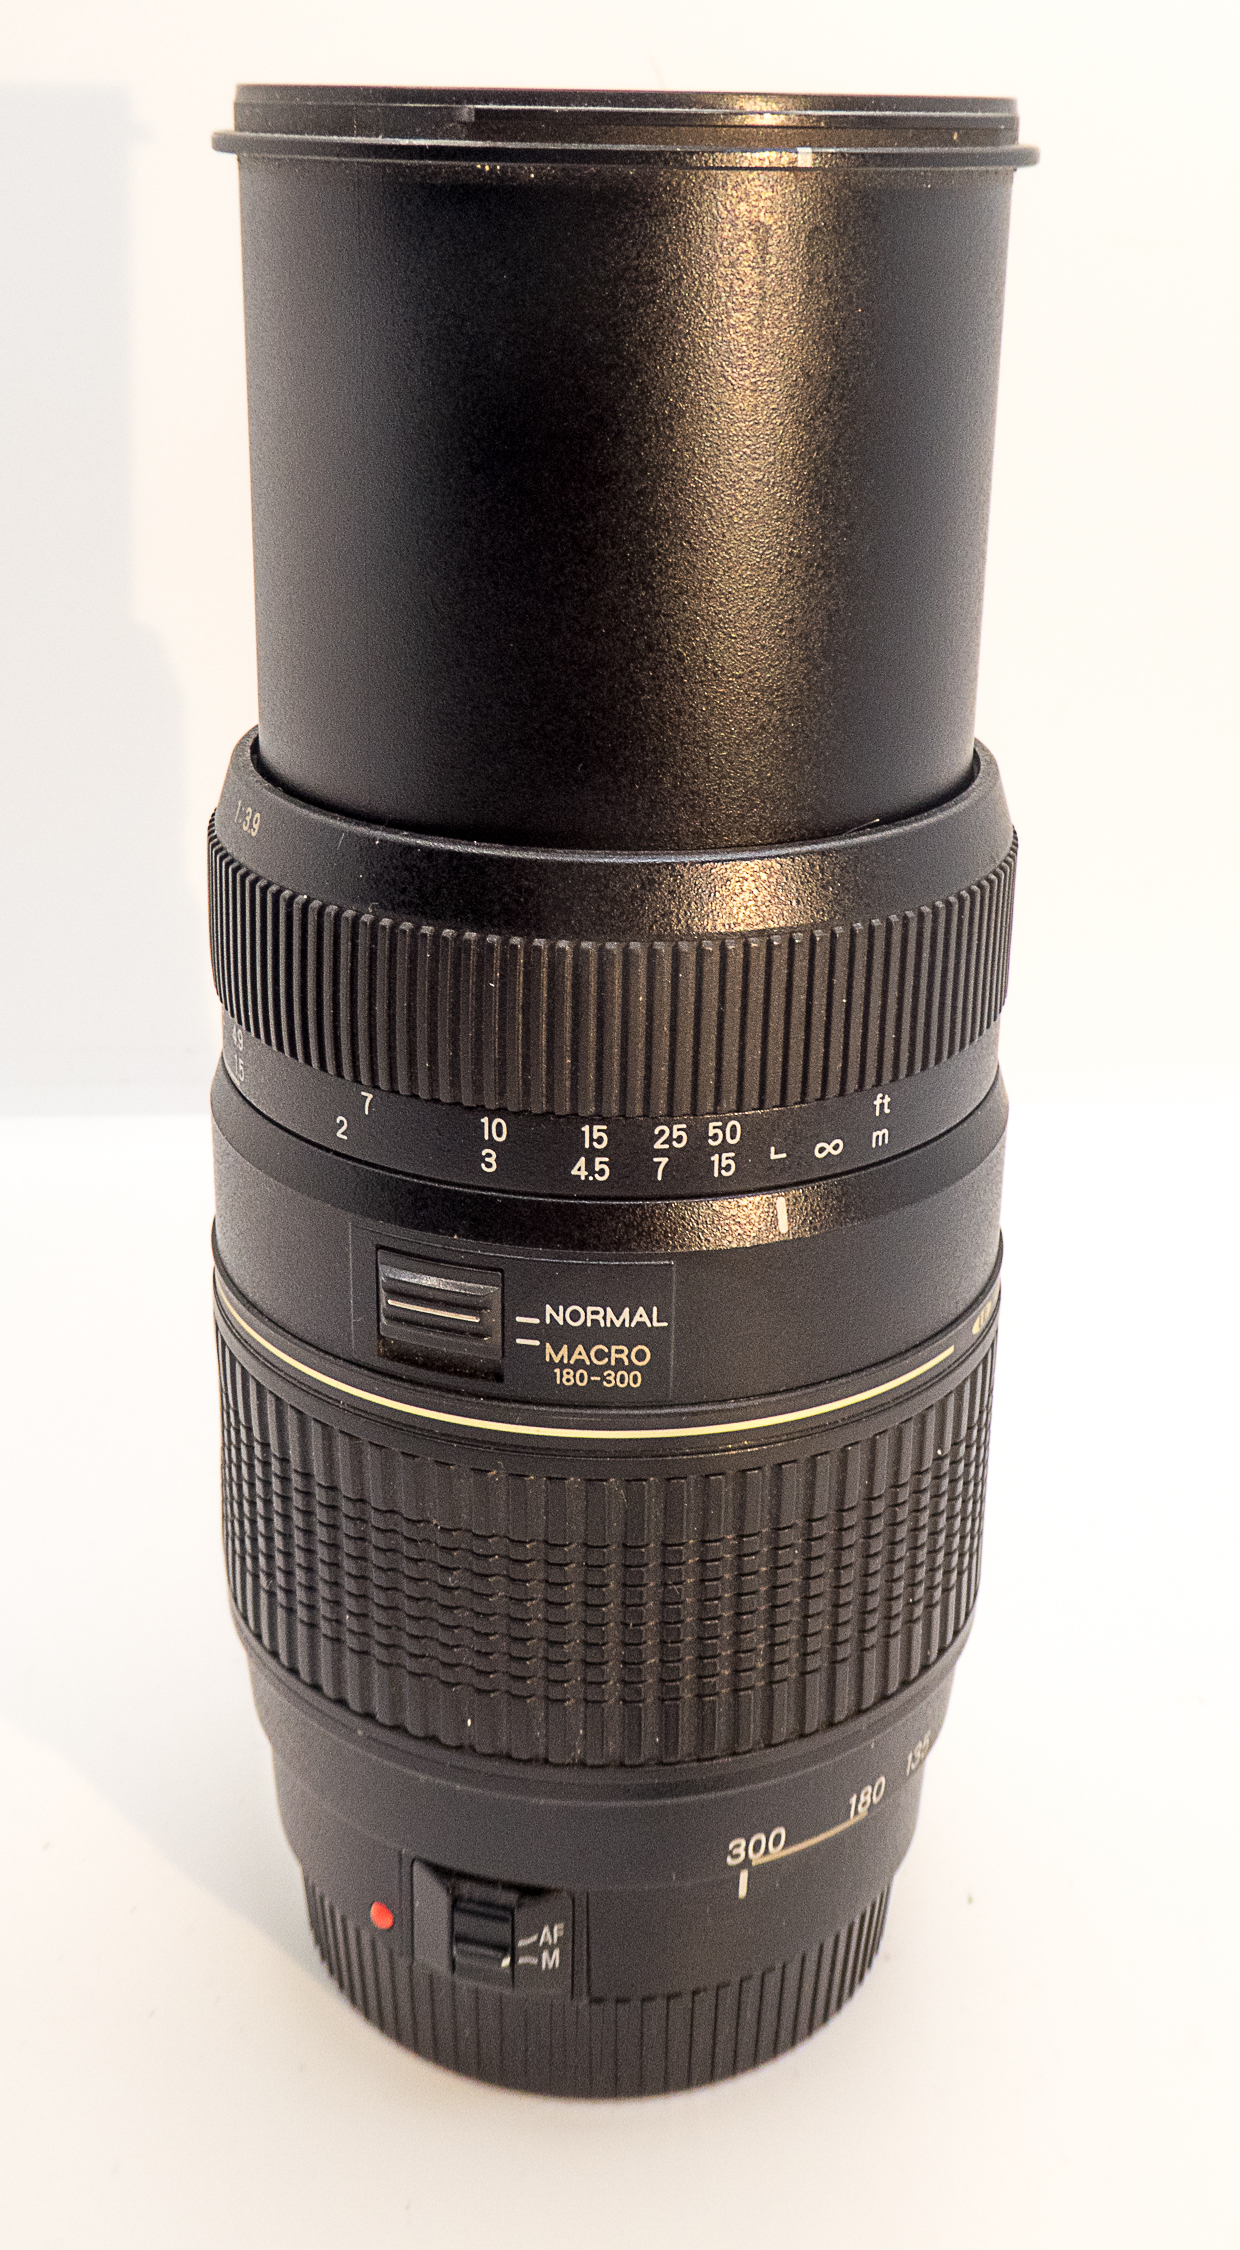 Tamron AF 70-300mm f/4.0-5.6 Di LD Macro Zoom Lens for Pentax Digital SLR  Cameras (Model A17P)